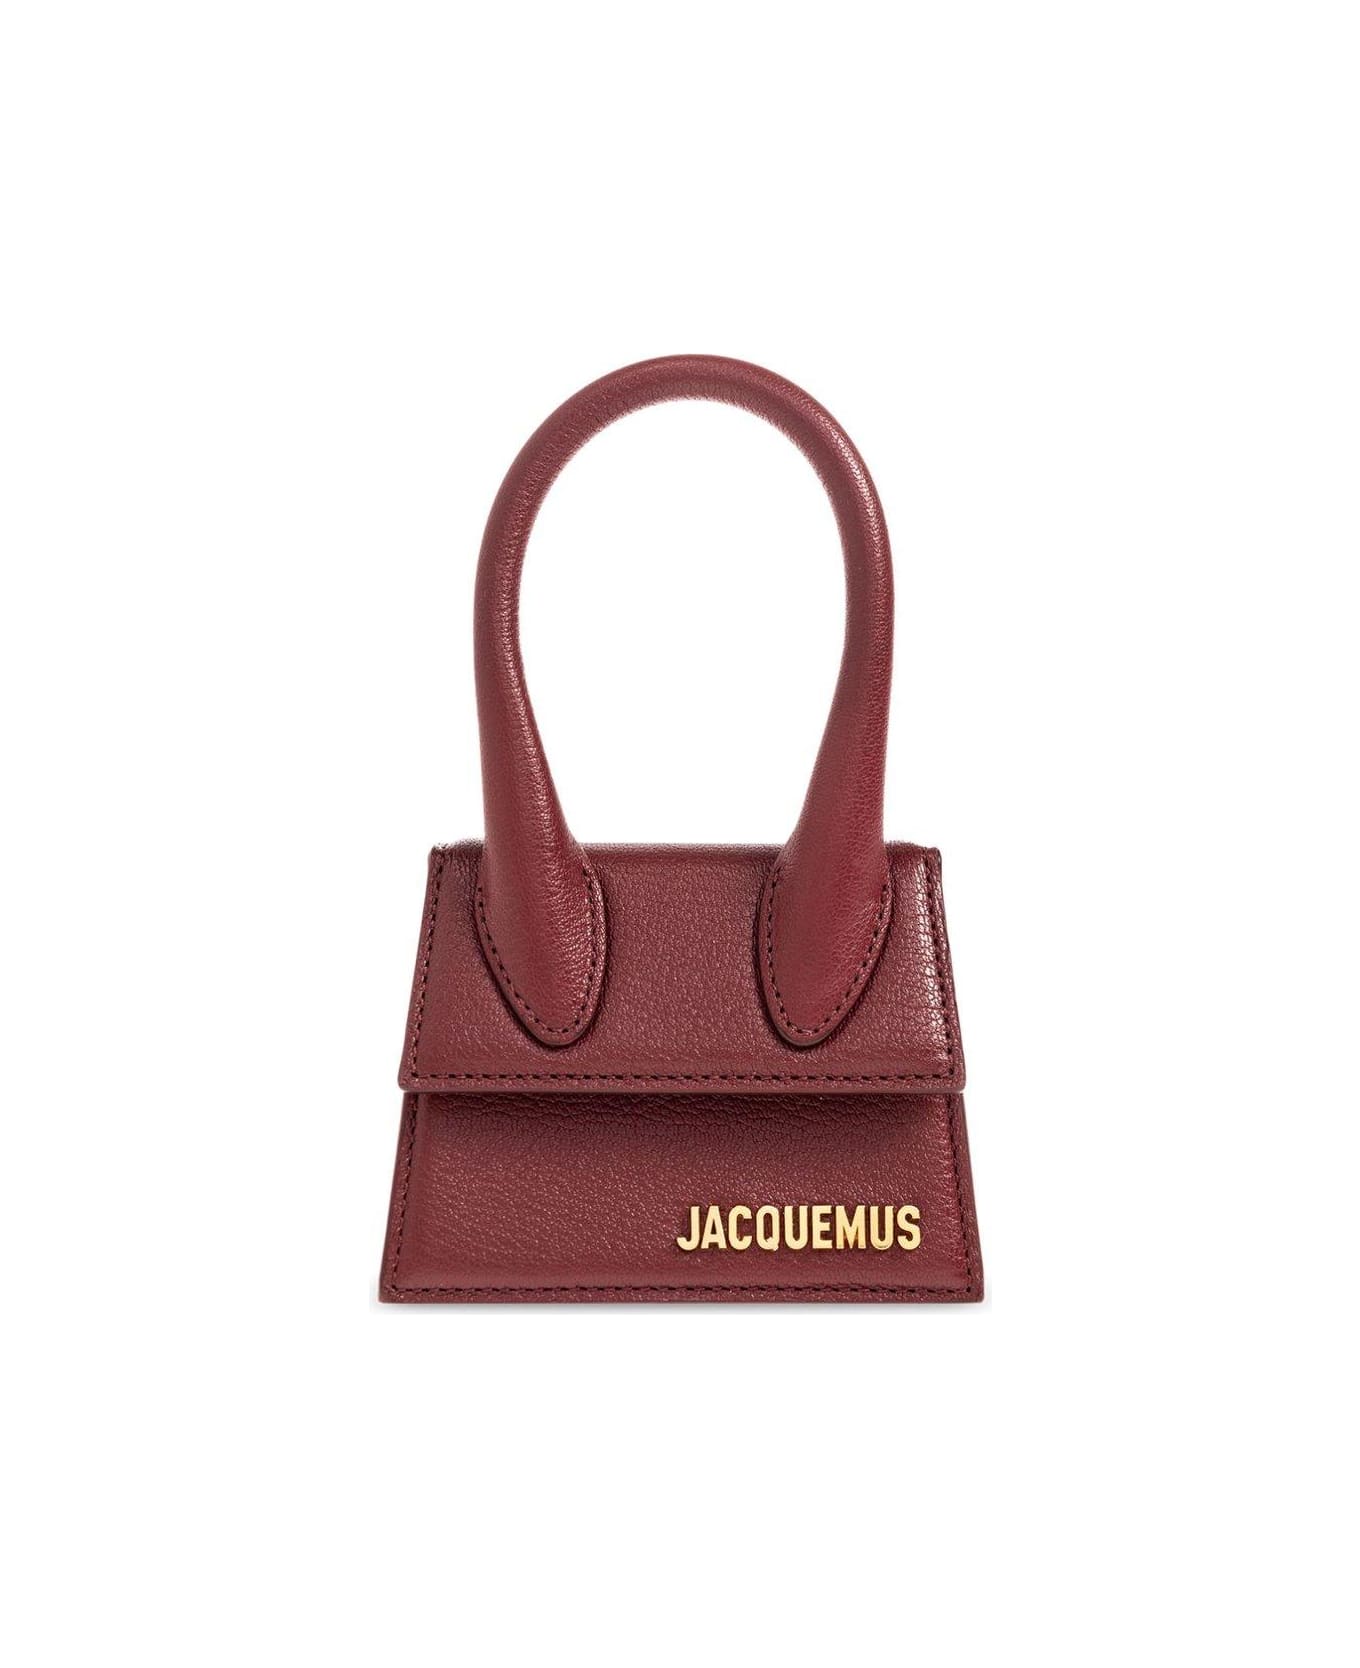 Jacquemus Le Chiquito Shoulder Bag - RED